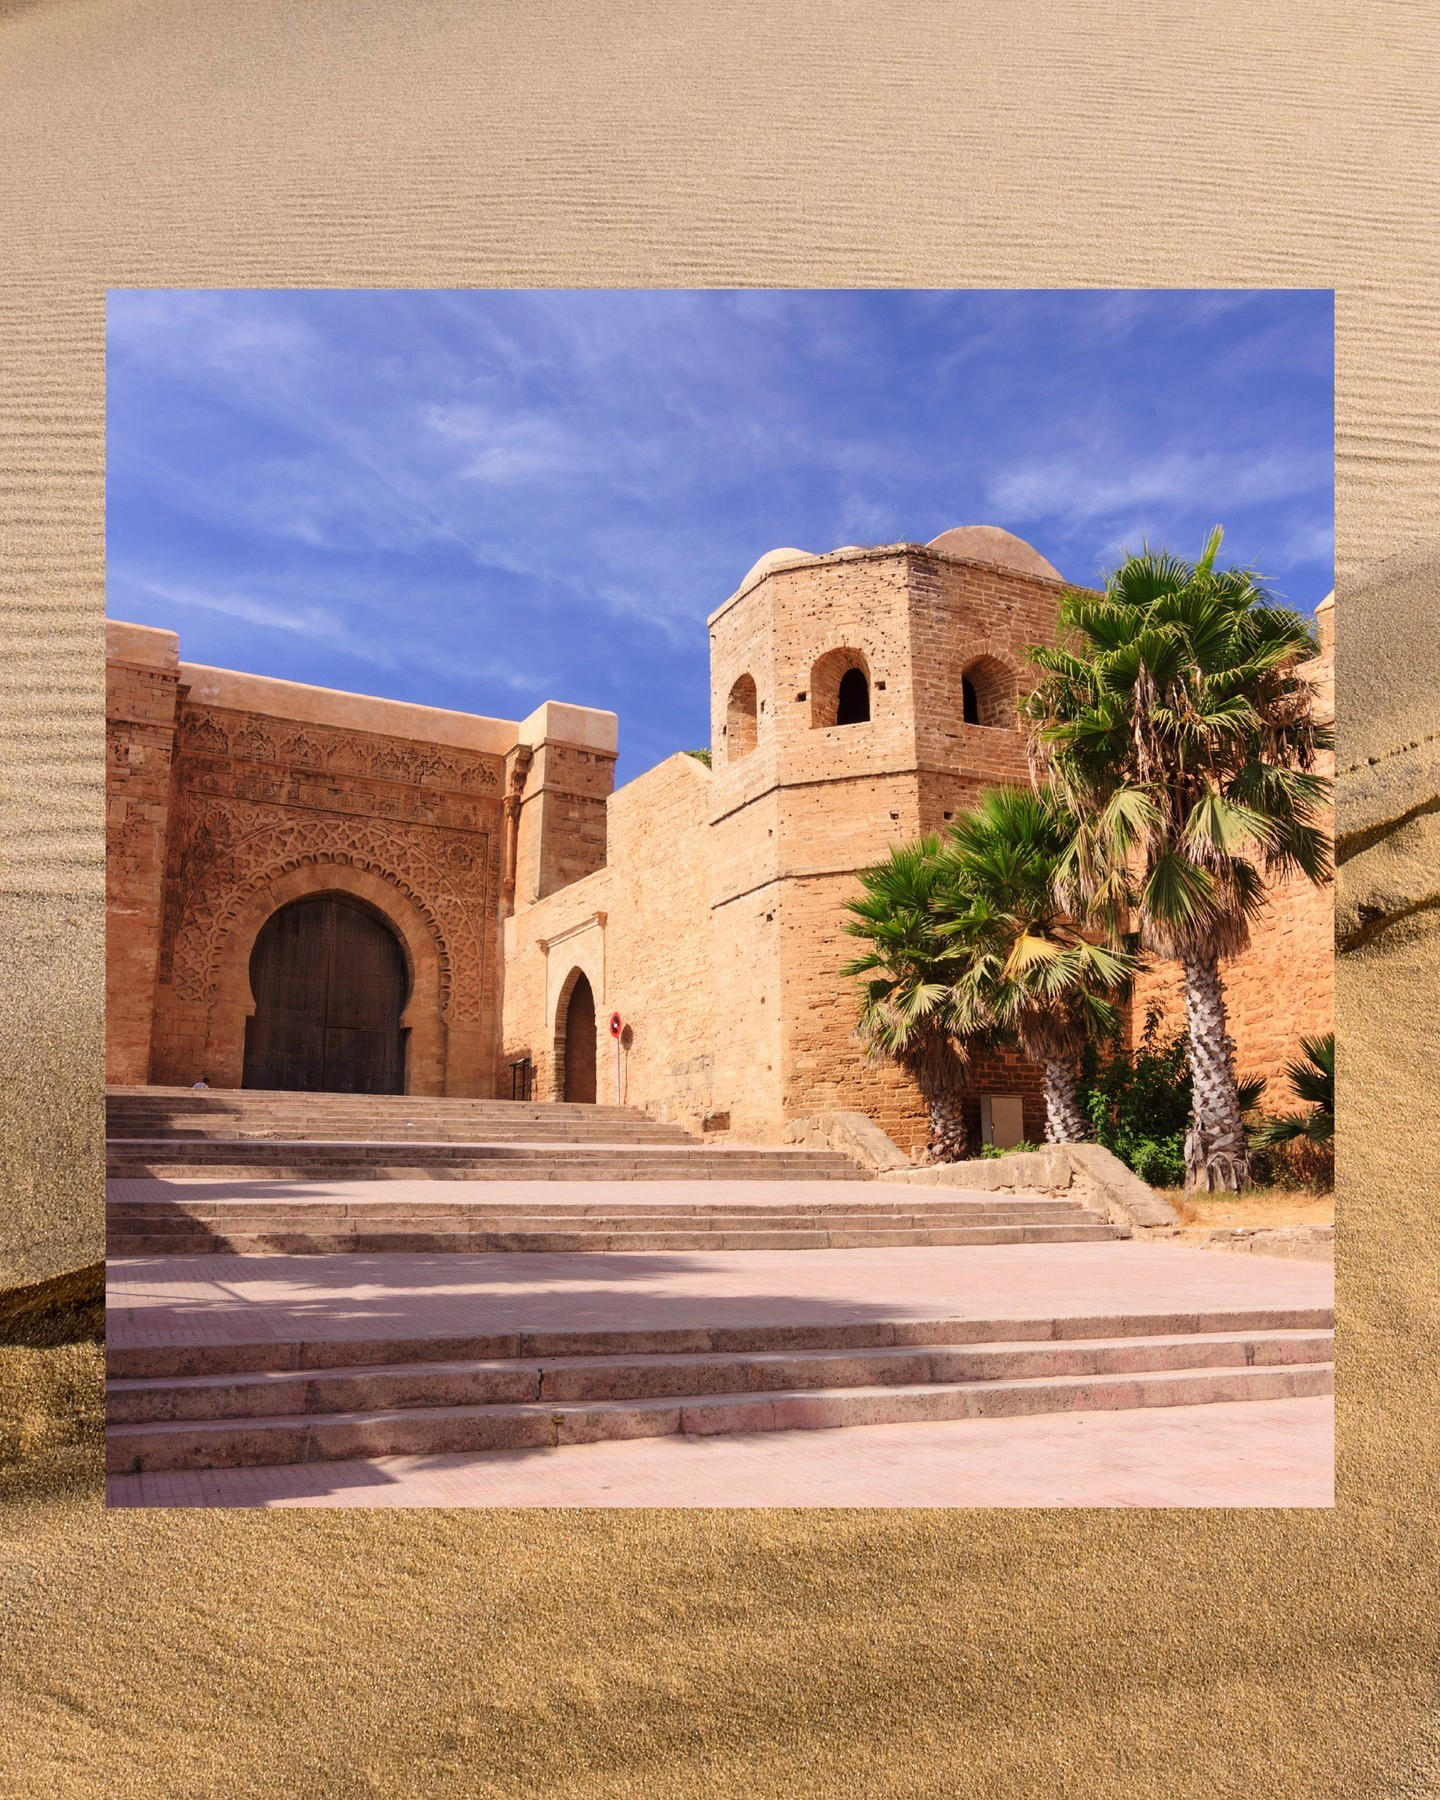 Conrad Hotels - #Conrad_Rabat_Arzana puts you at the heart of Morocco's coastal city of Temara